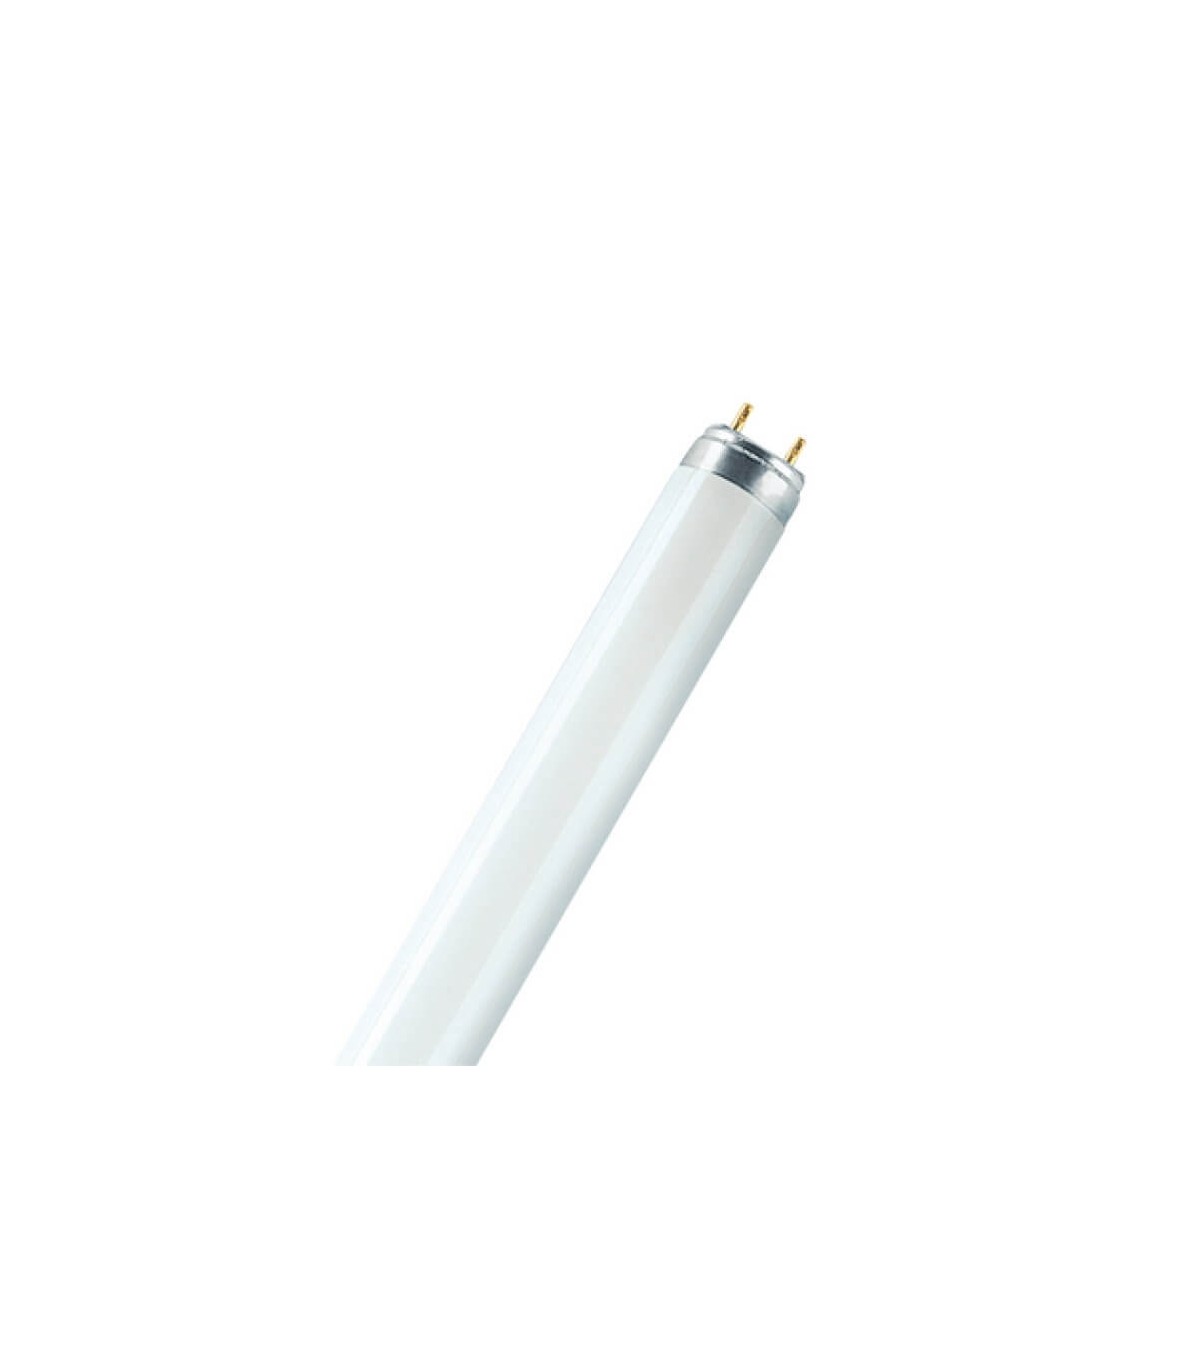 Tube Néon LED T8 60cm Blanc froid